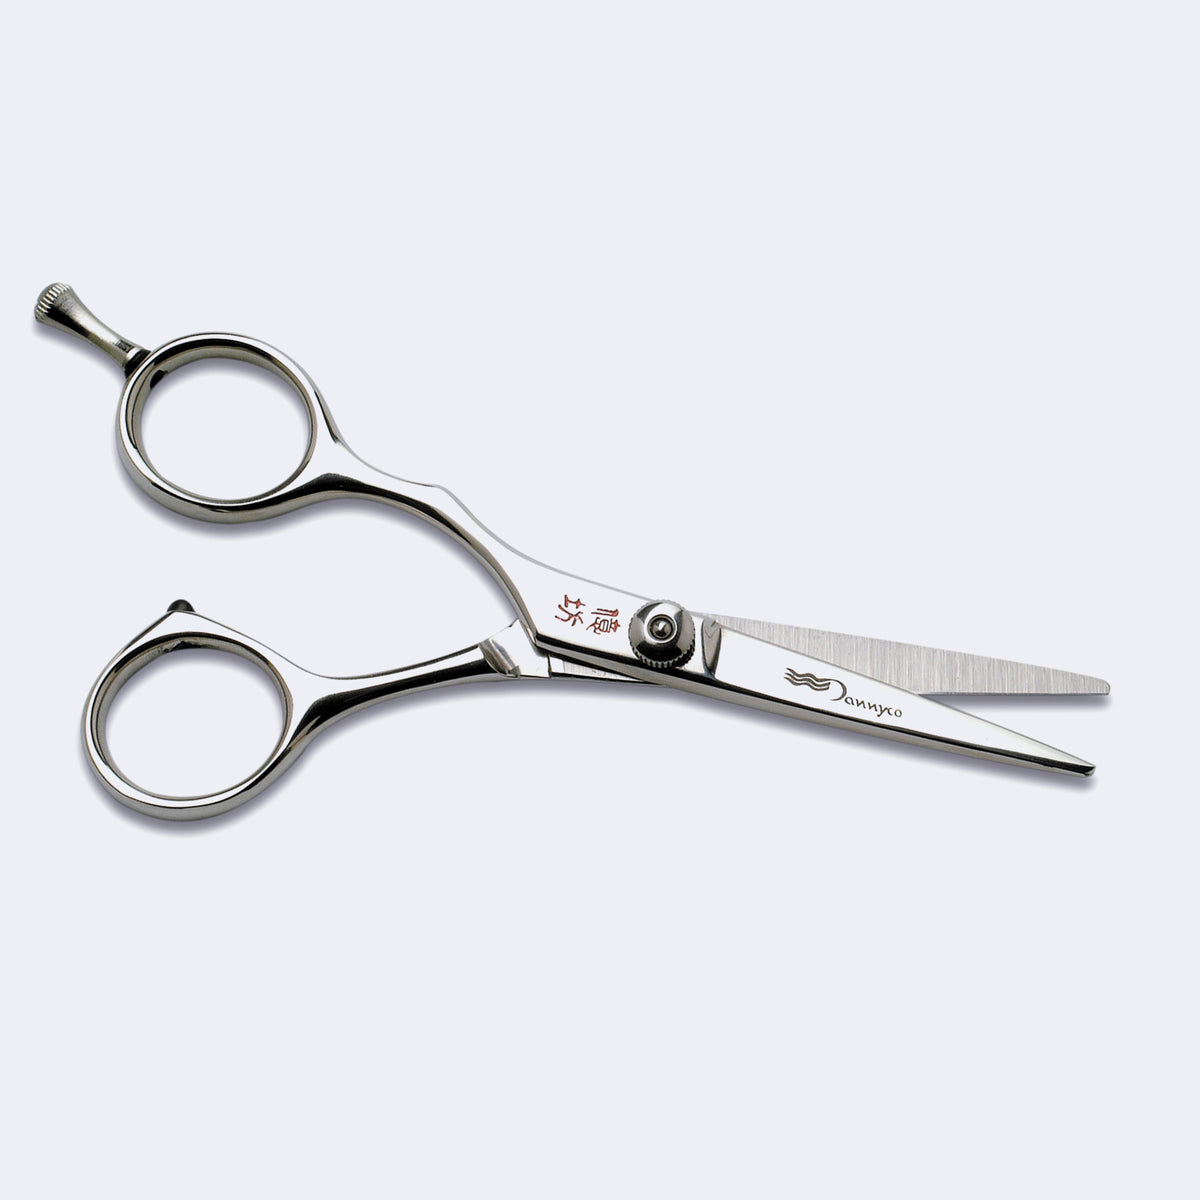 DANNYCO LEFTY SCISSORS  5" LEFTY scissors, offset handles